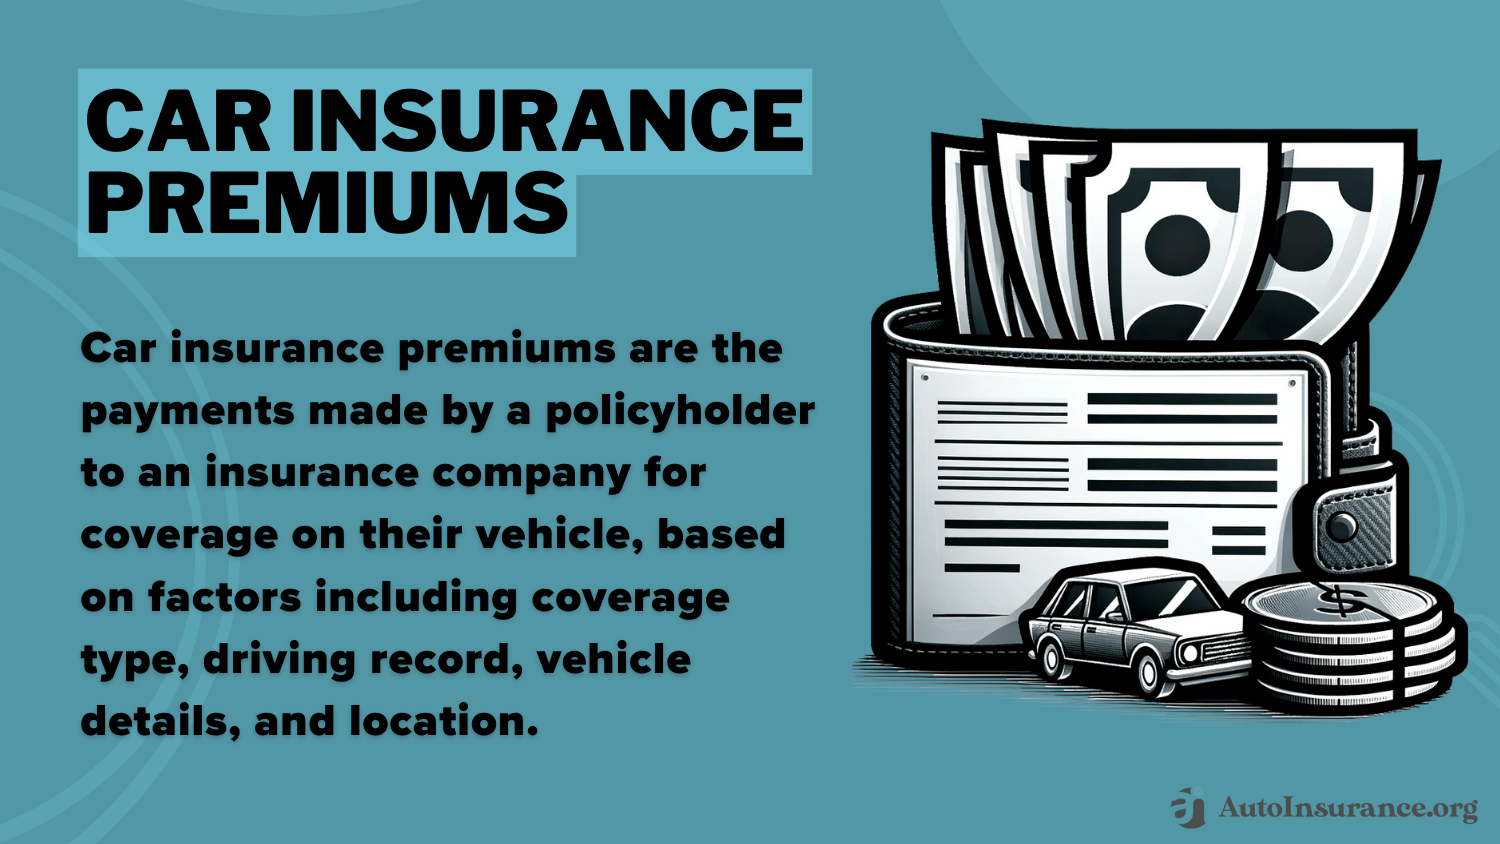 State Farm Auto Insurance Discounts: Car Insurance Premiums Definition Card